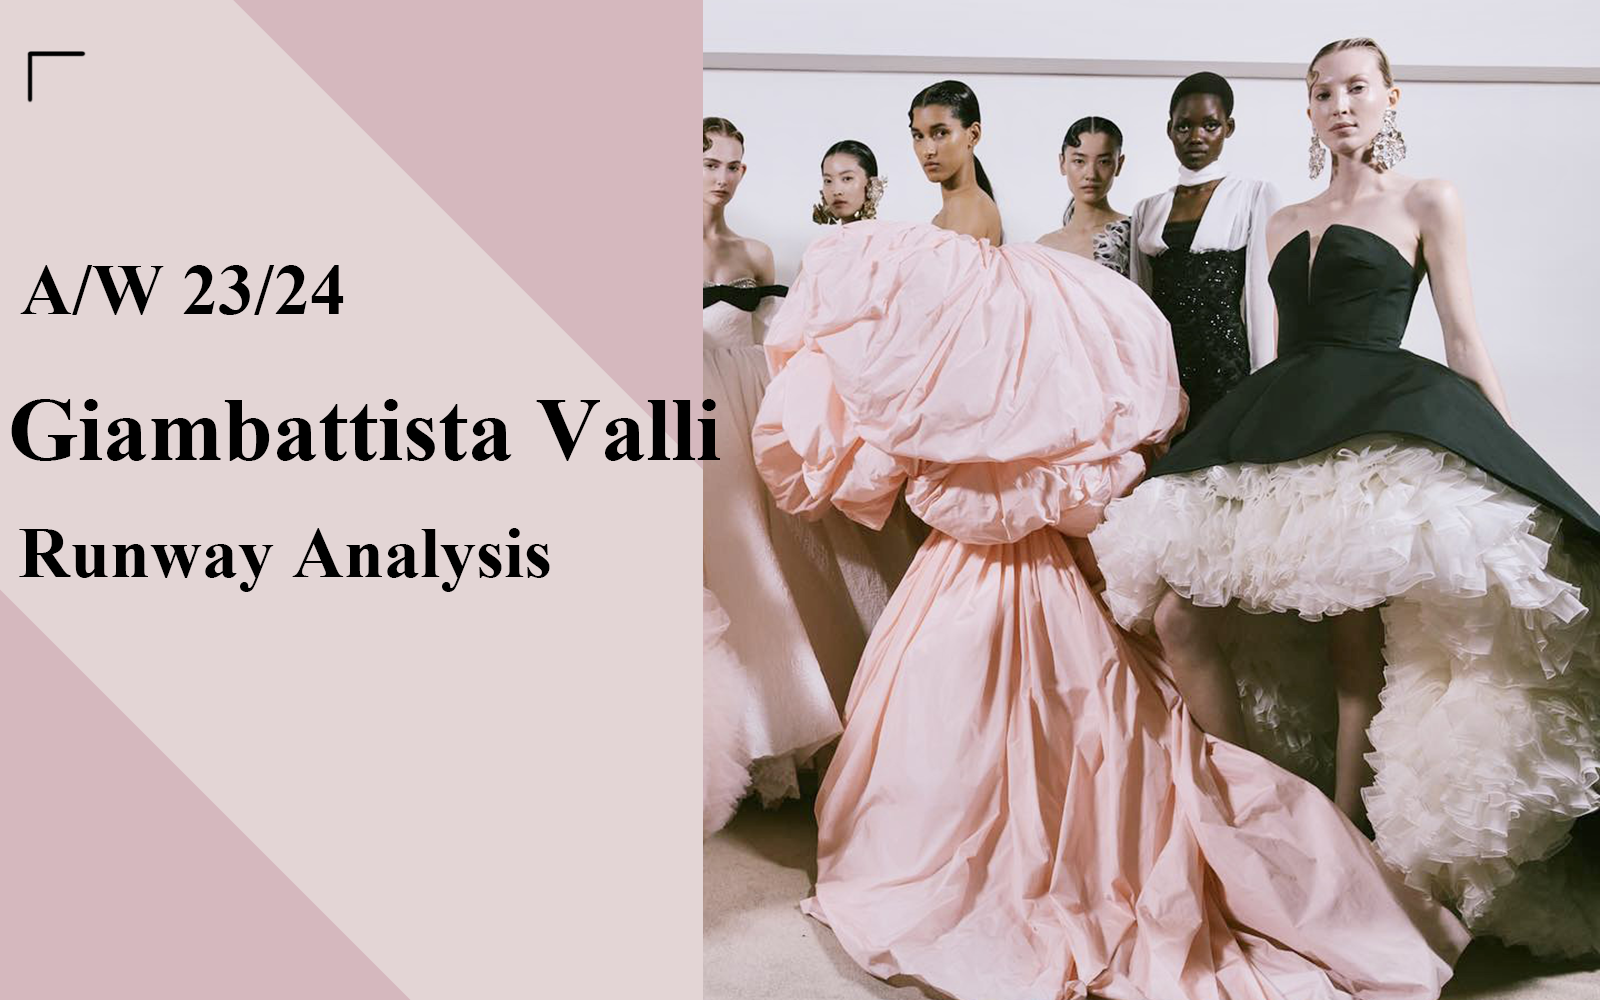 Romantic Declaration -- The Couture Runway Analysis of Giambattista Valli